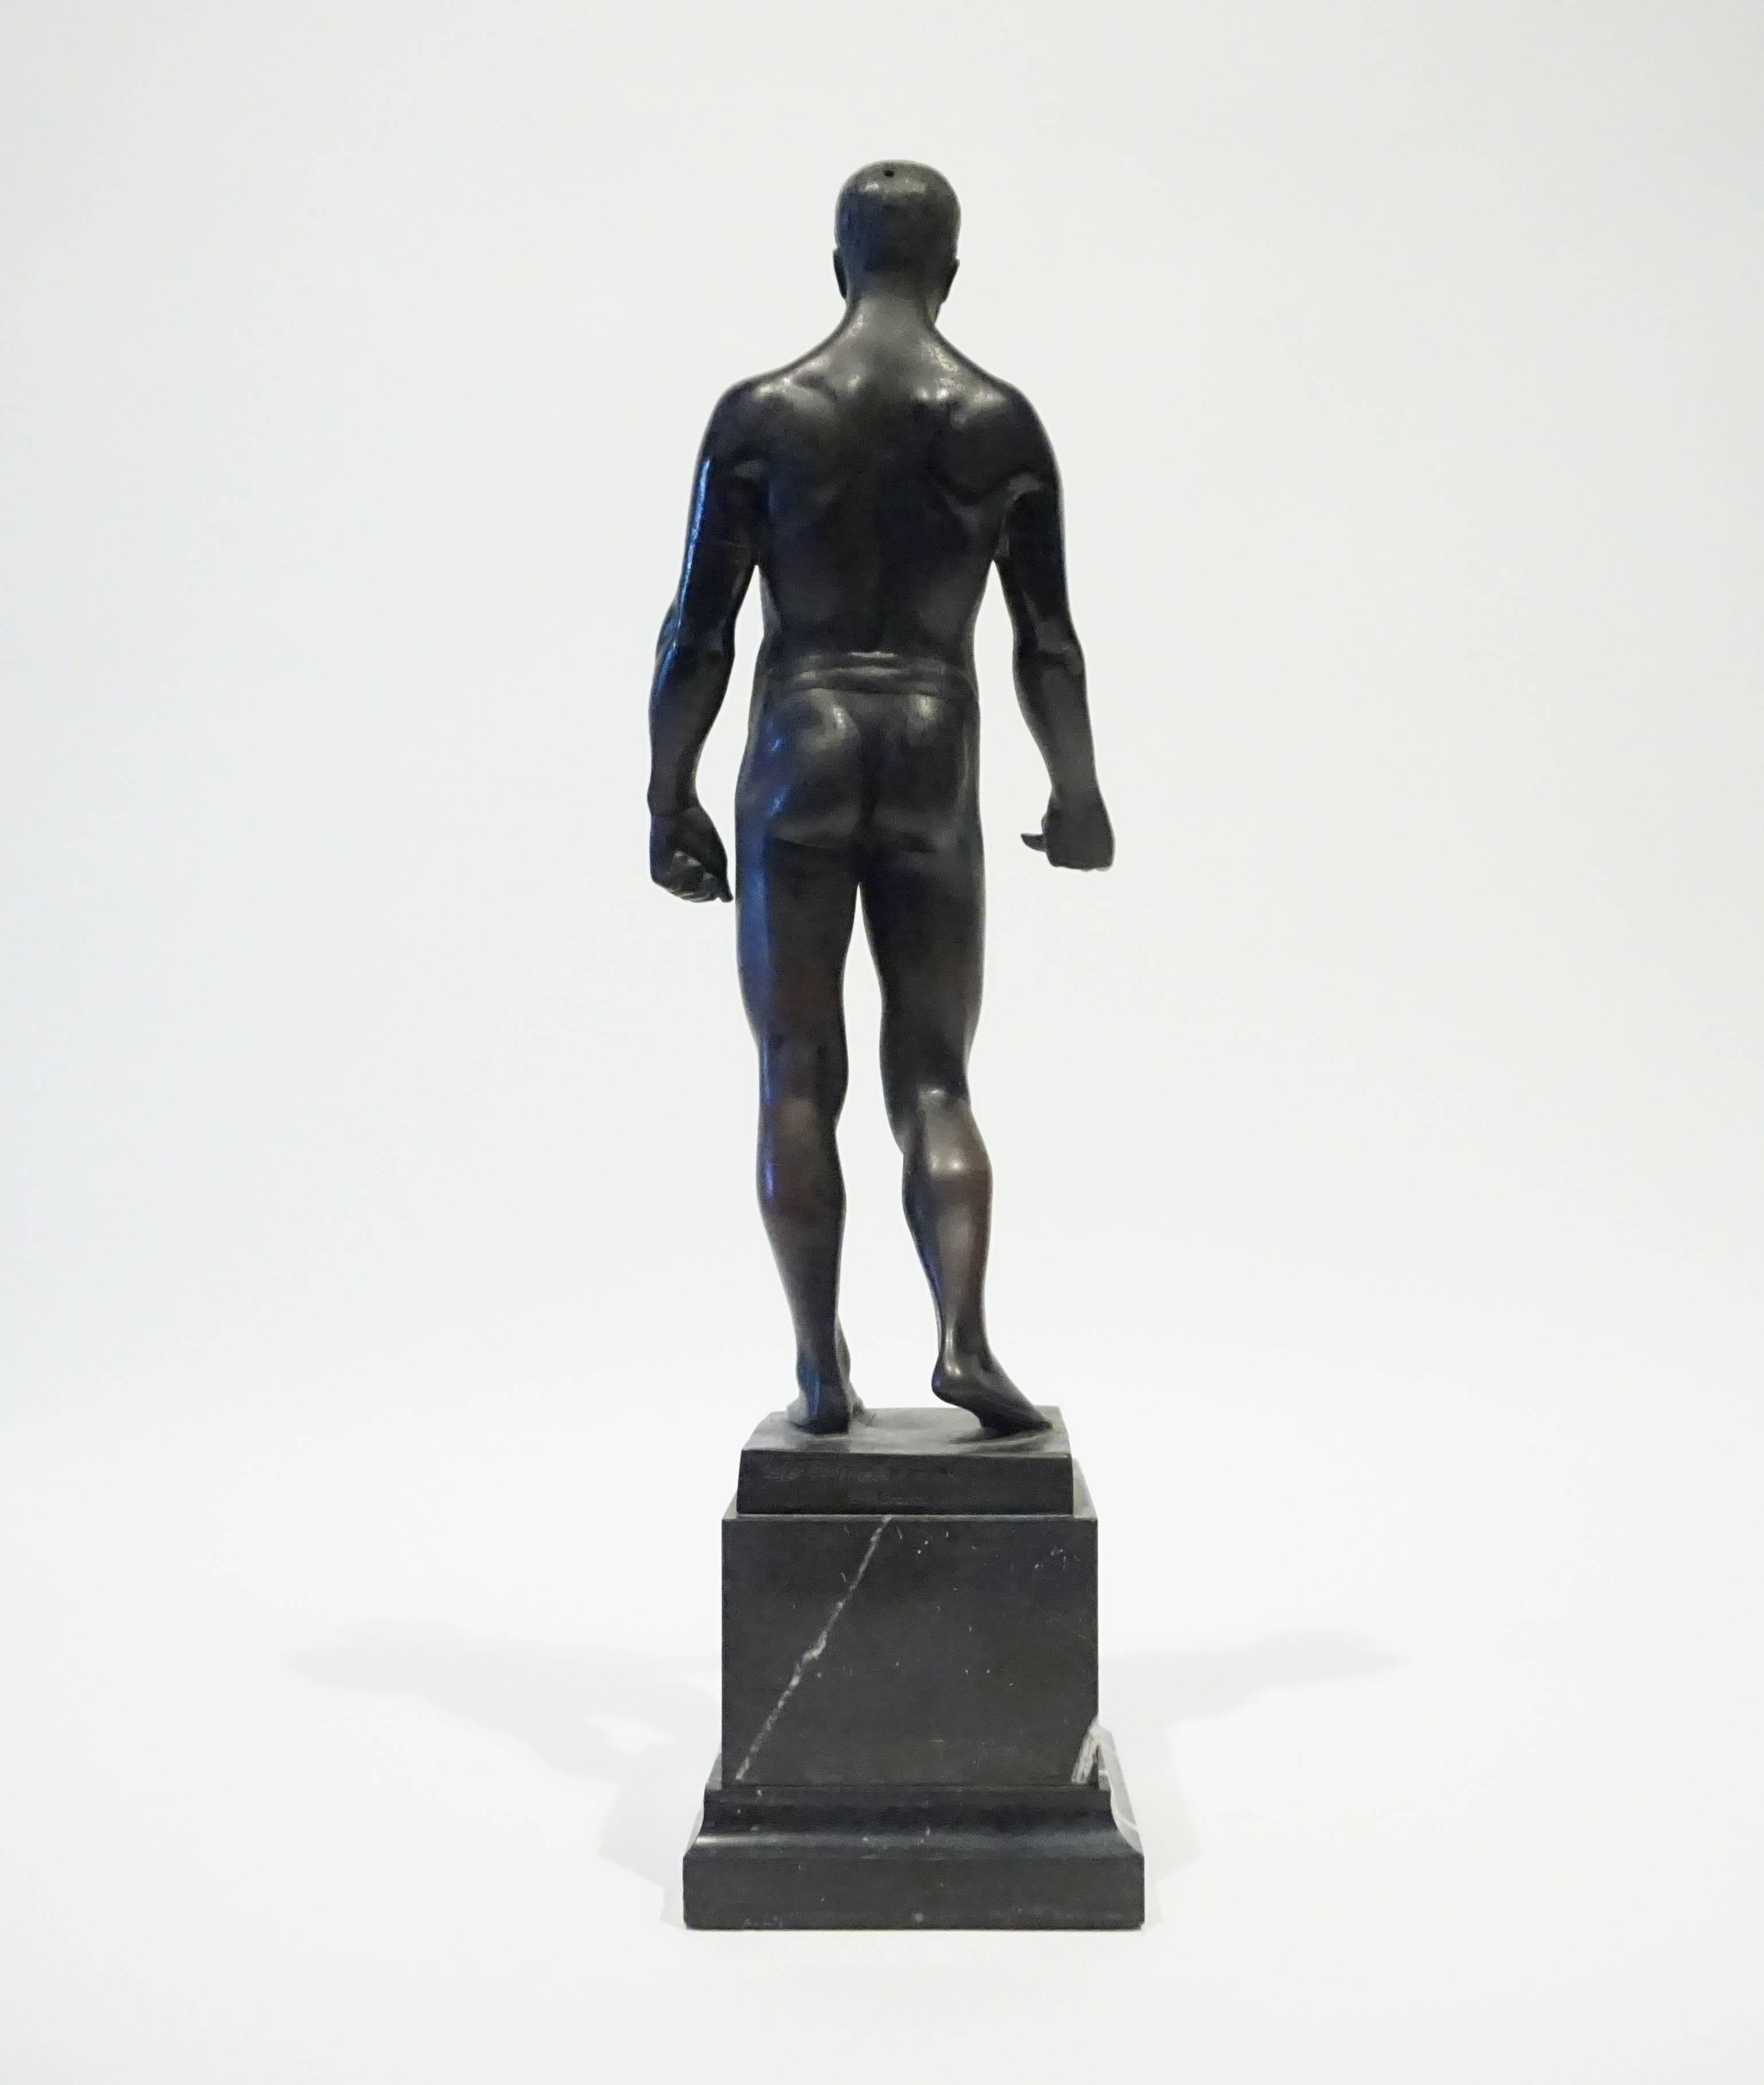 Classical Roman Bronze Figure of a Male Athlete by German Sculptor Ferdinand Frick C. 1910